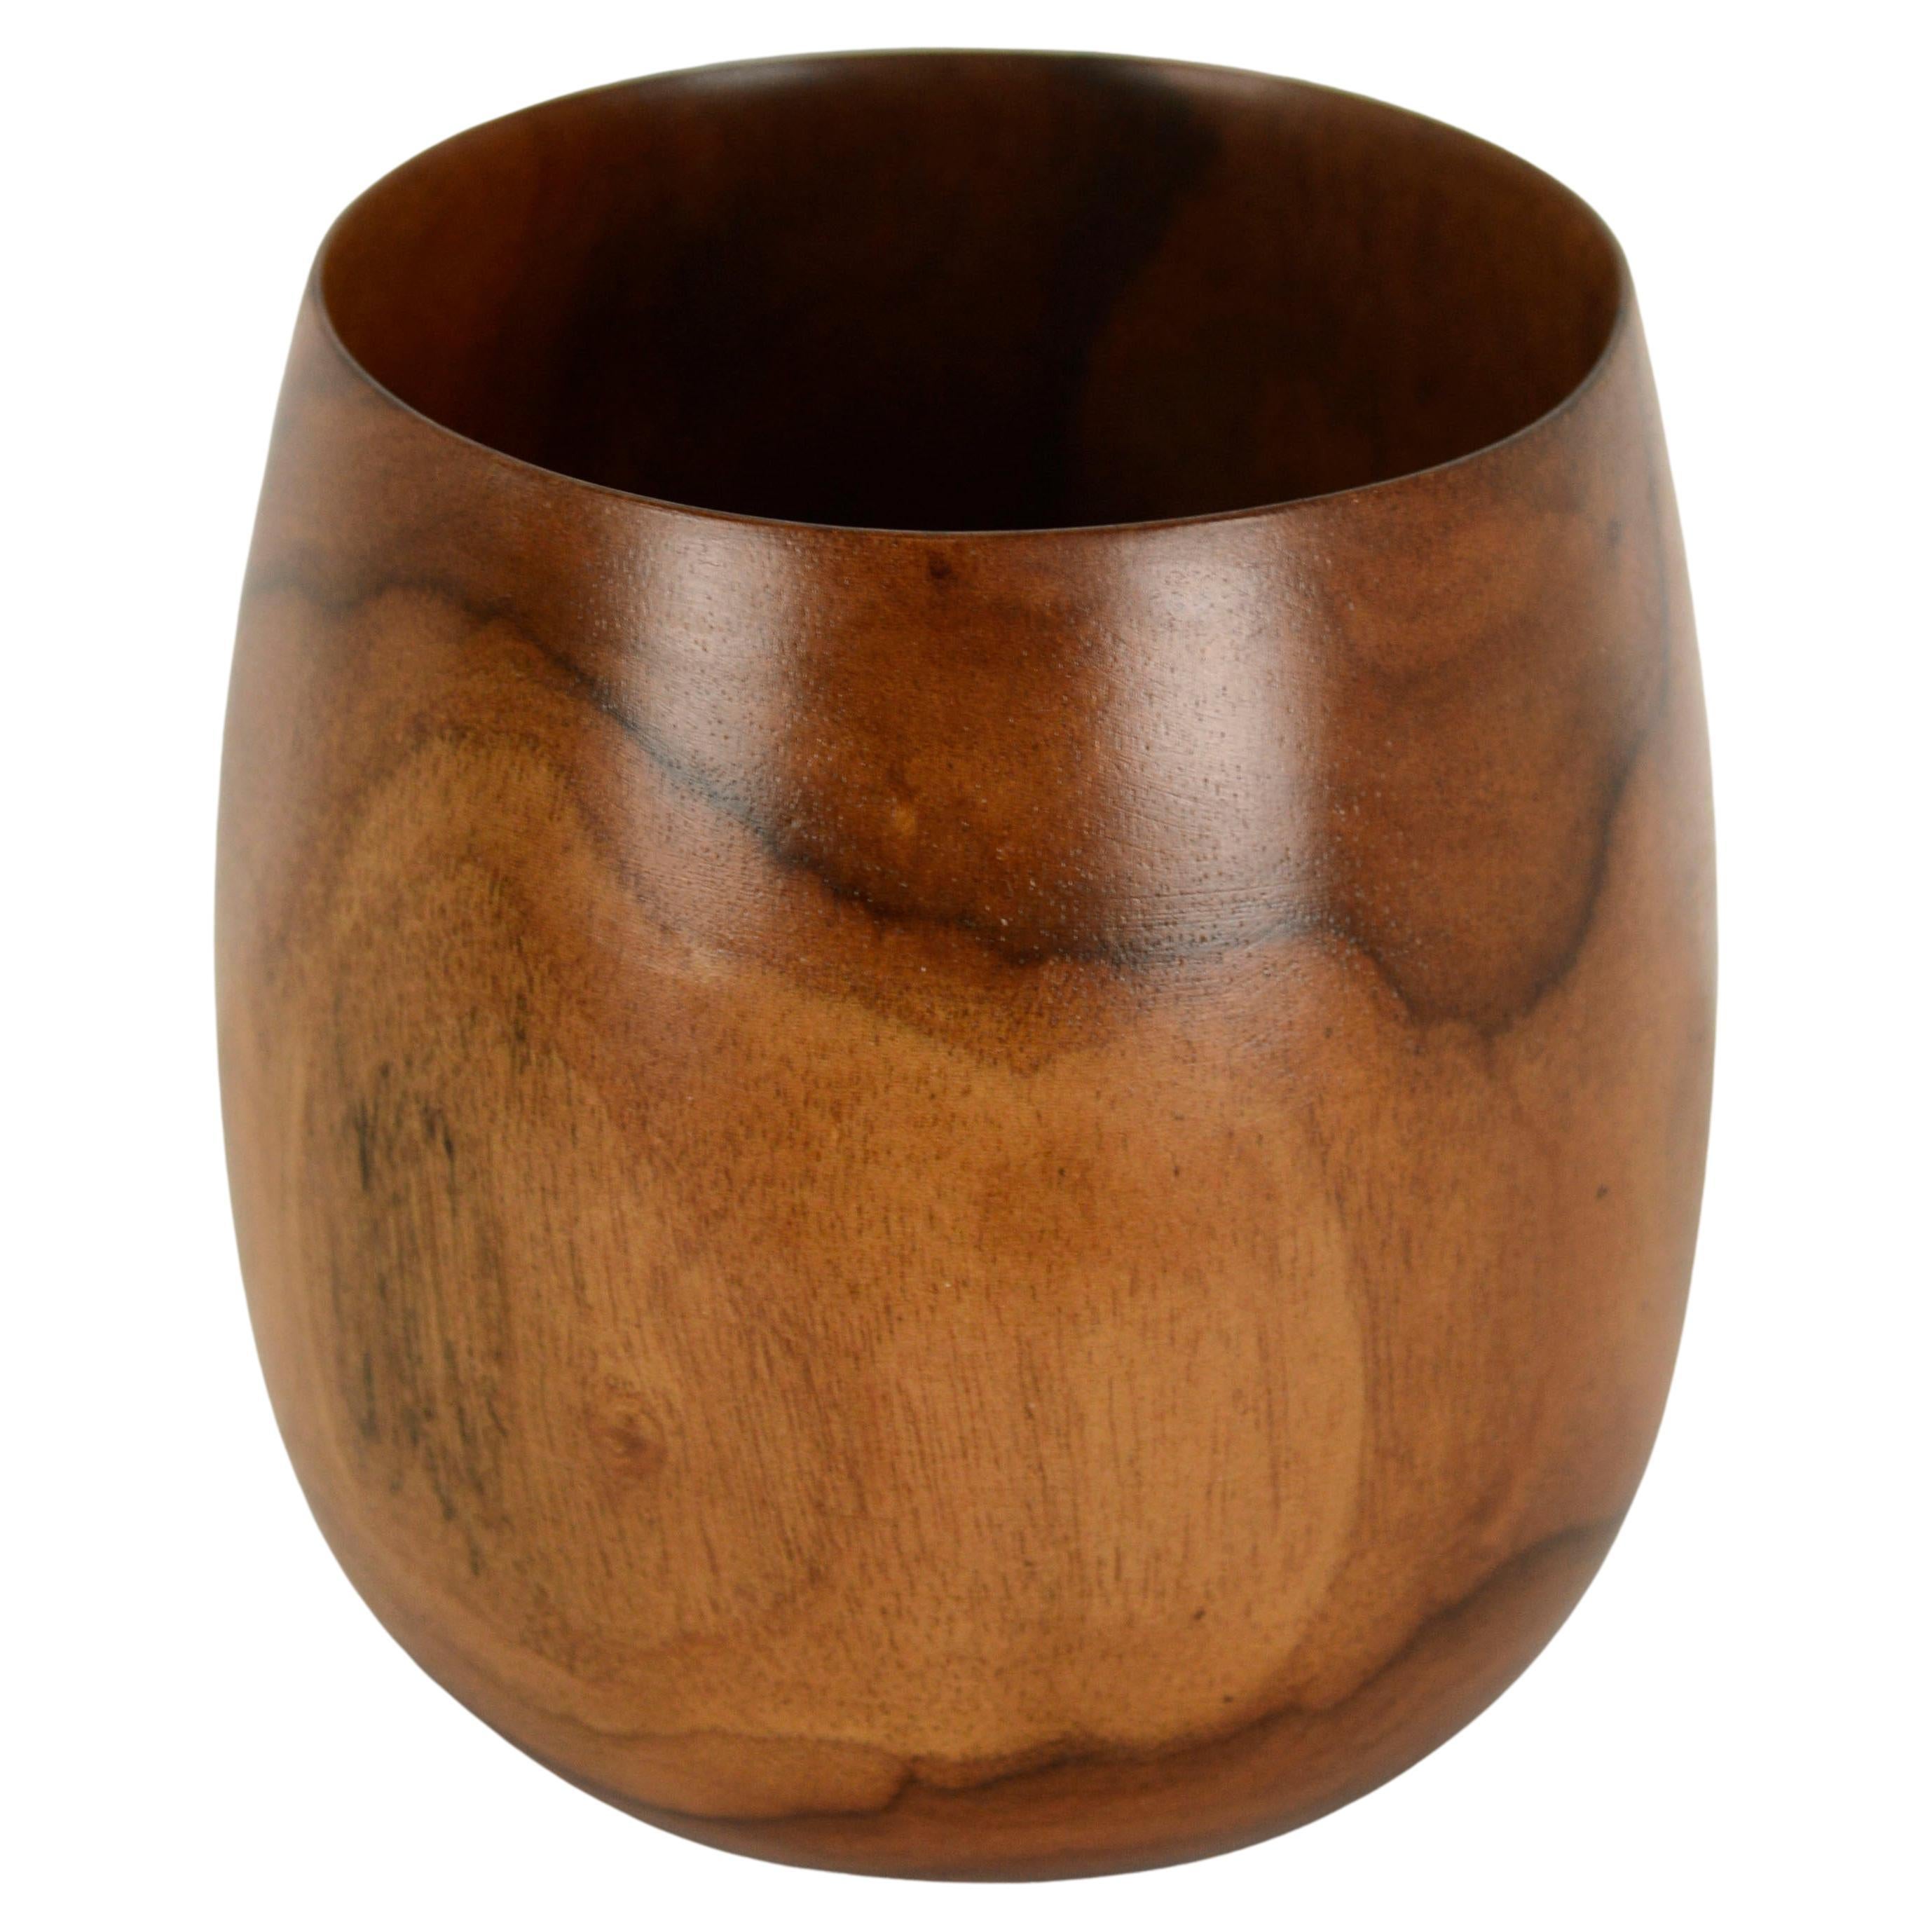 Milo Wood Bowl, Hawaiian Hand Turned Wood Vessel by Joseph Mathieu